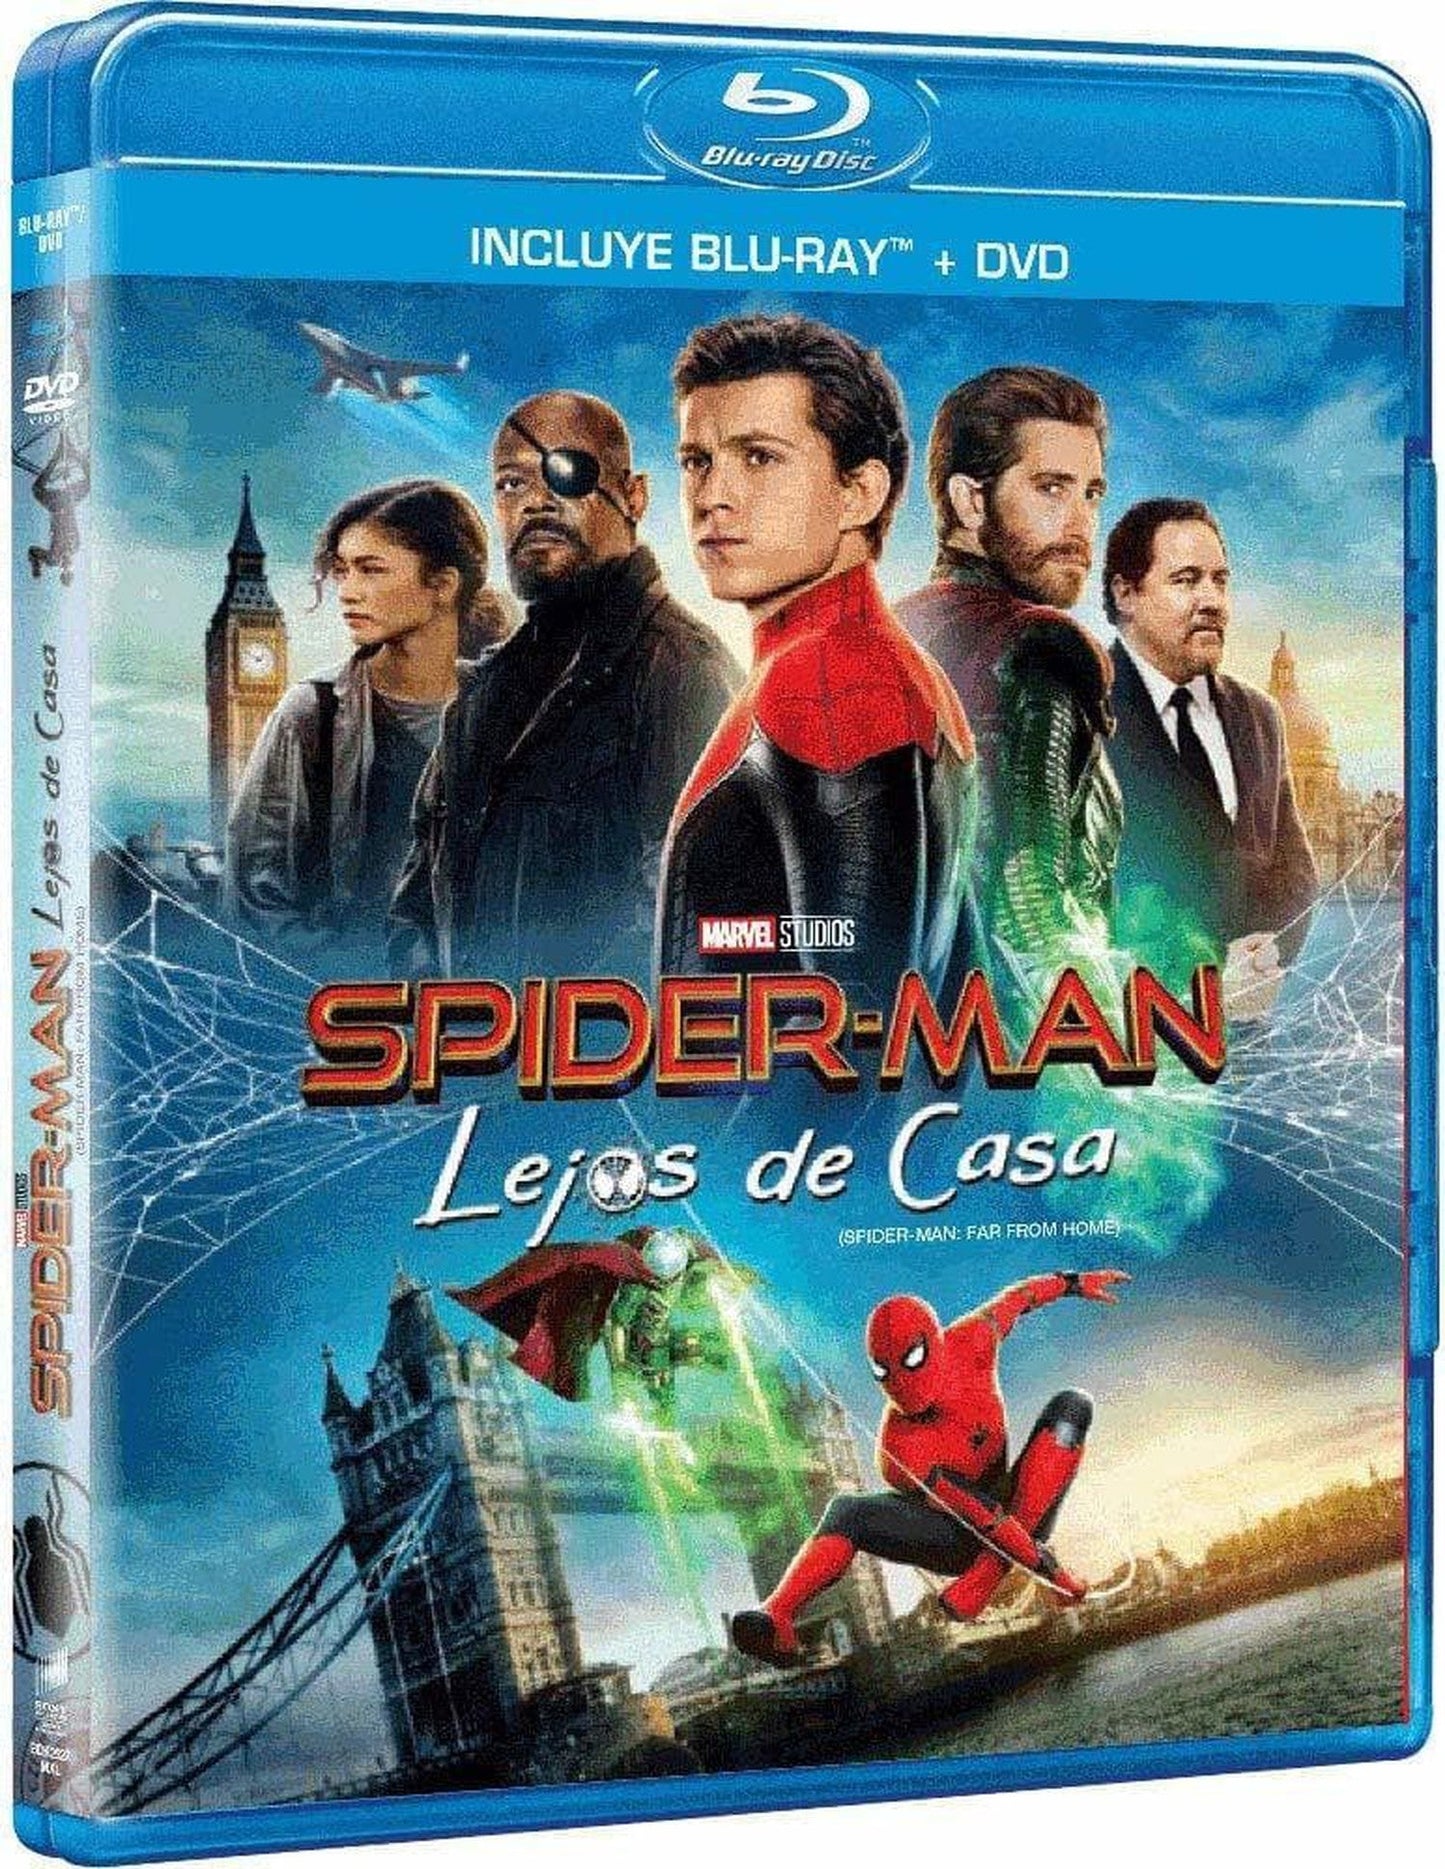 Spider-Man: Lejos de Casa (Spider-Man: Far from Home) - Blu-Ray